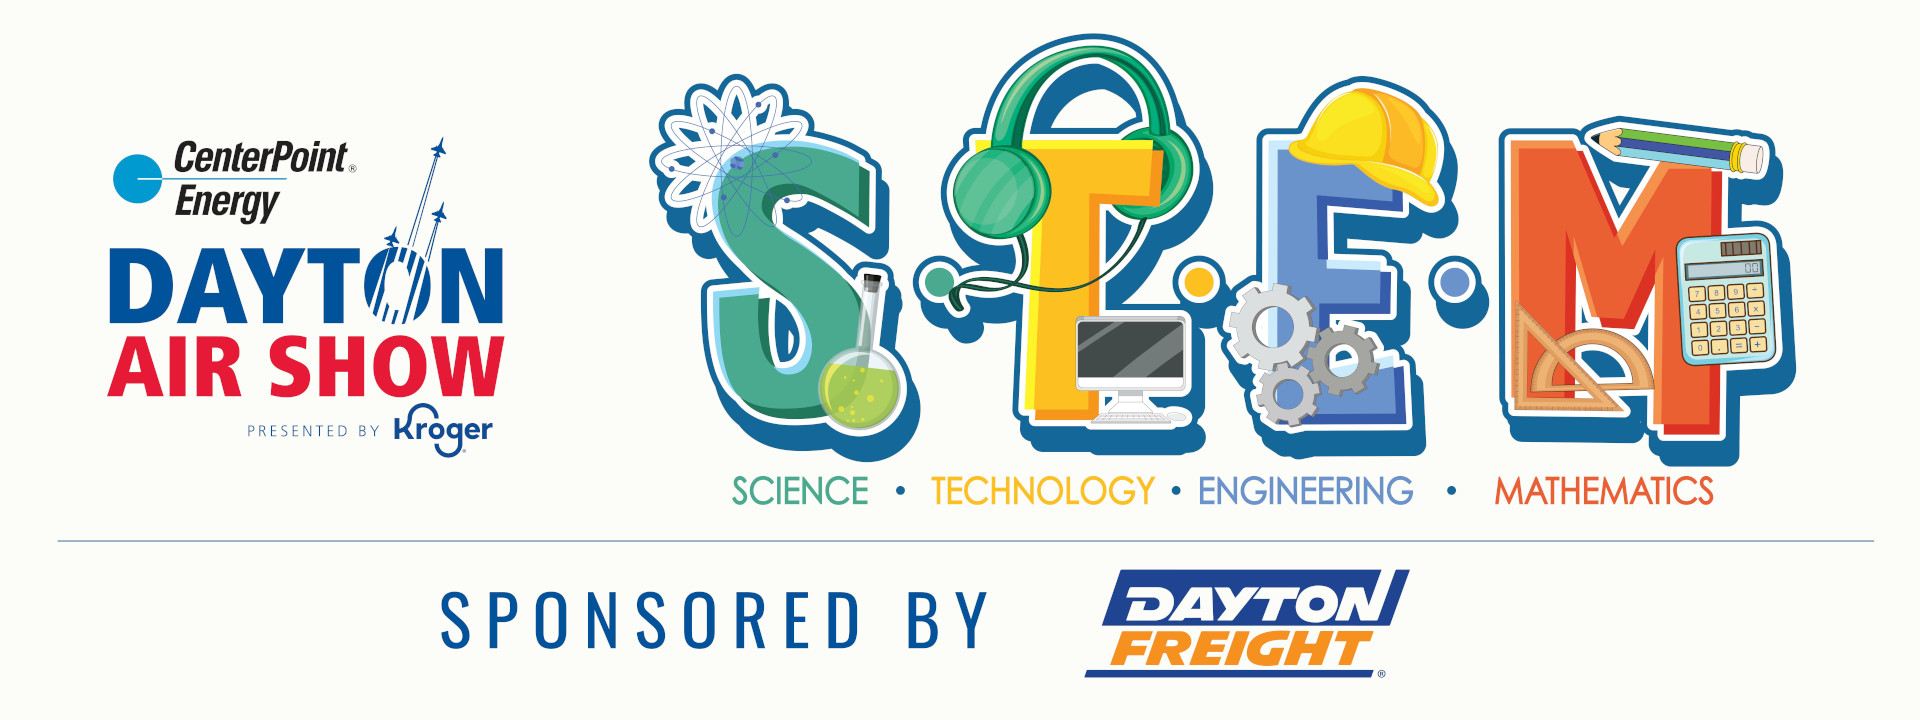 STEM - Sponsored by Dayton Freight